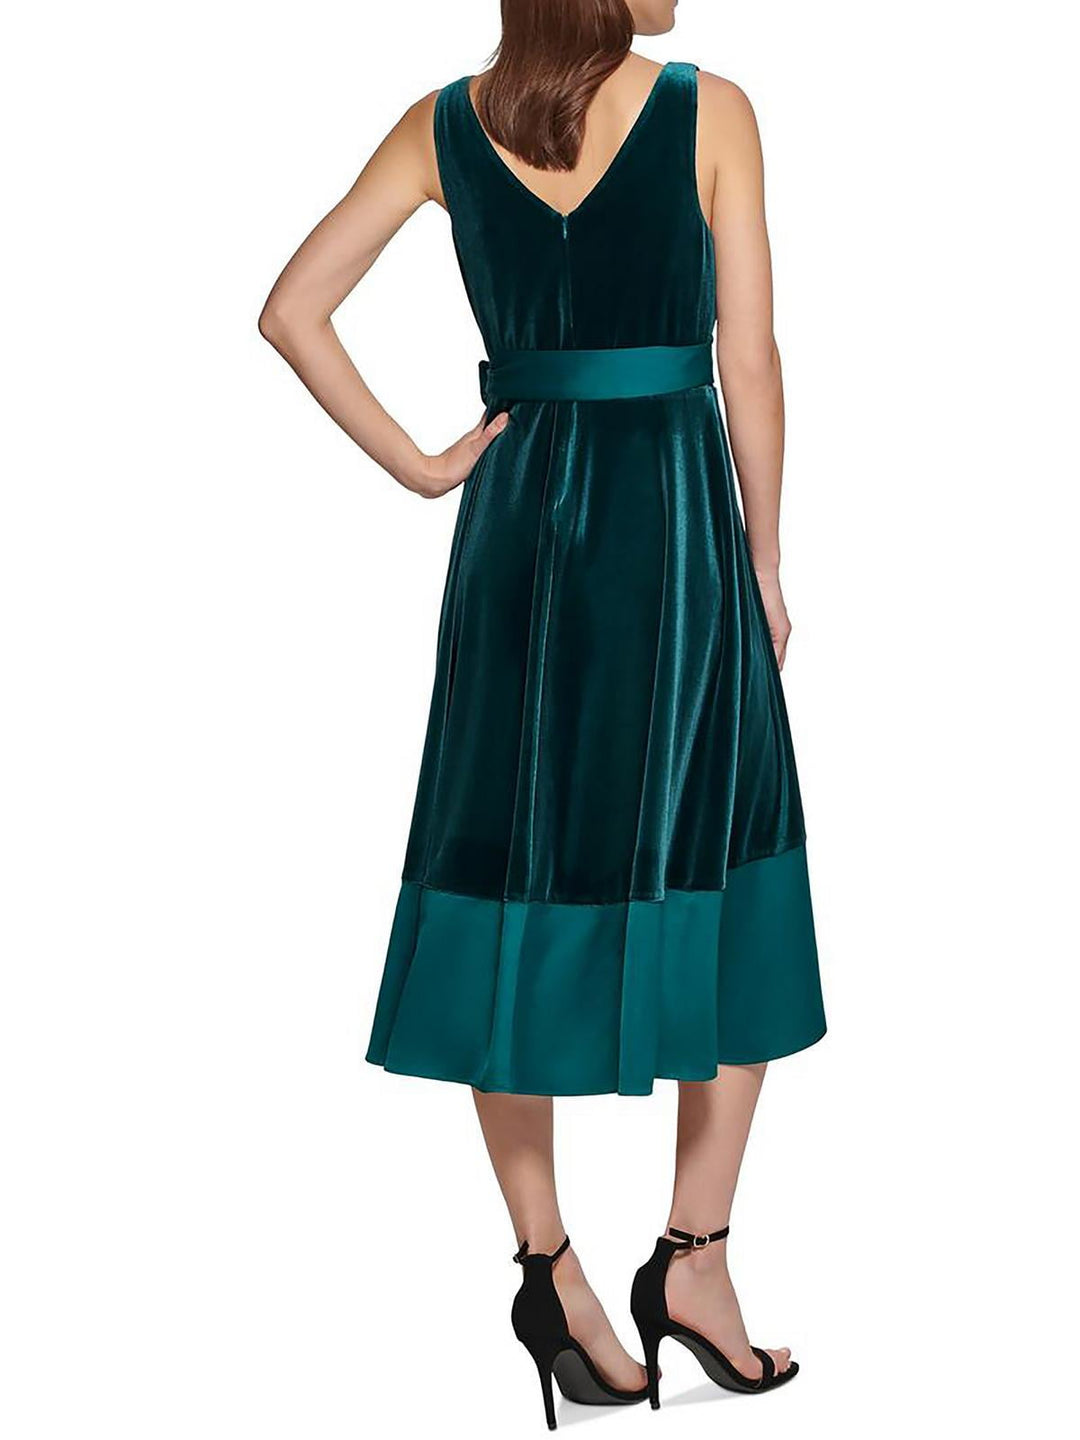 DKNY Women's Mixed Media Surplice V Neck Belted Dress Green Size 12